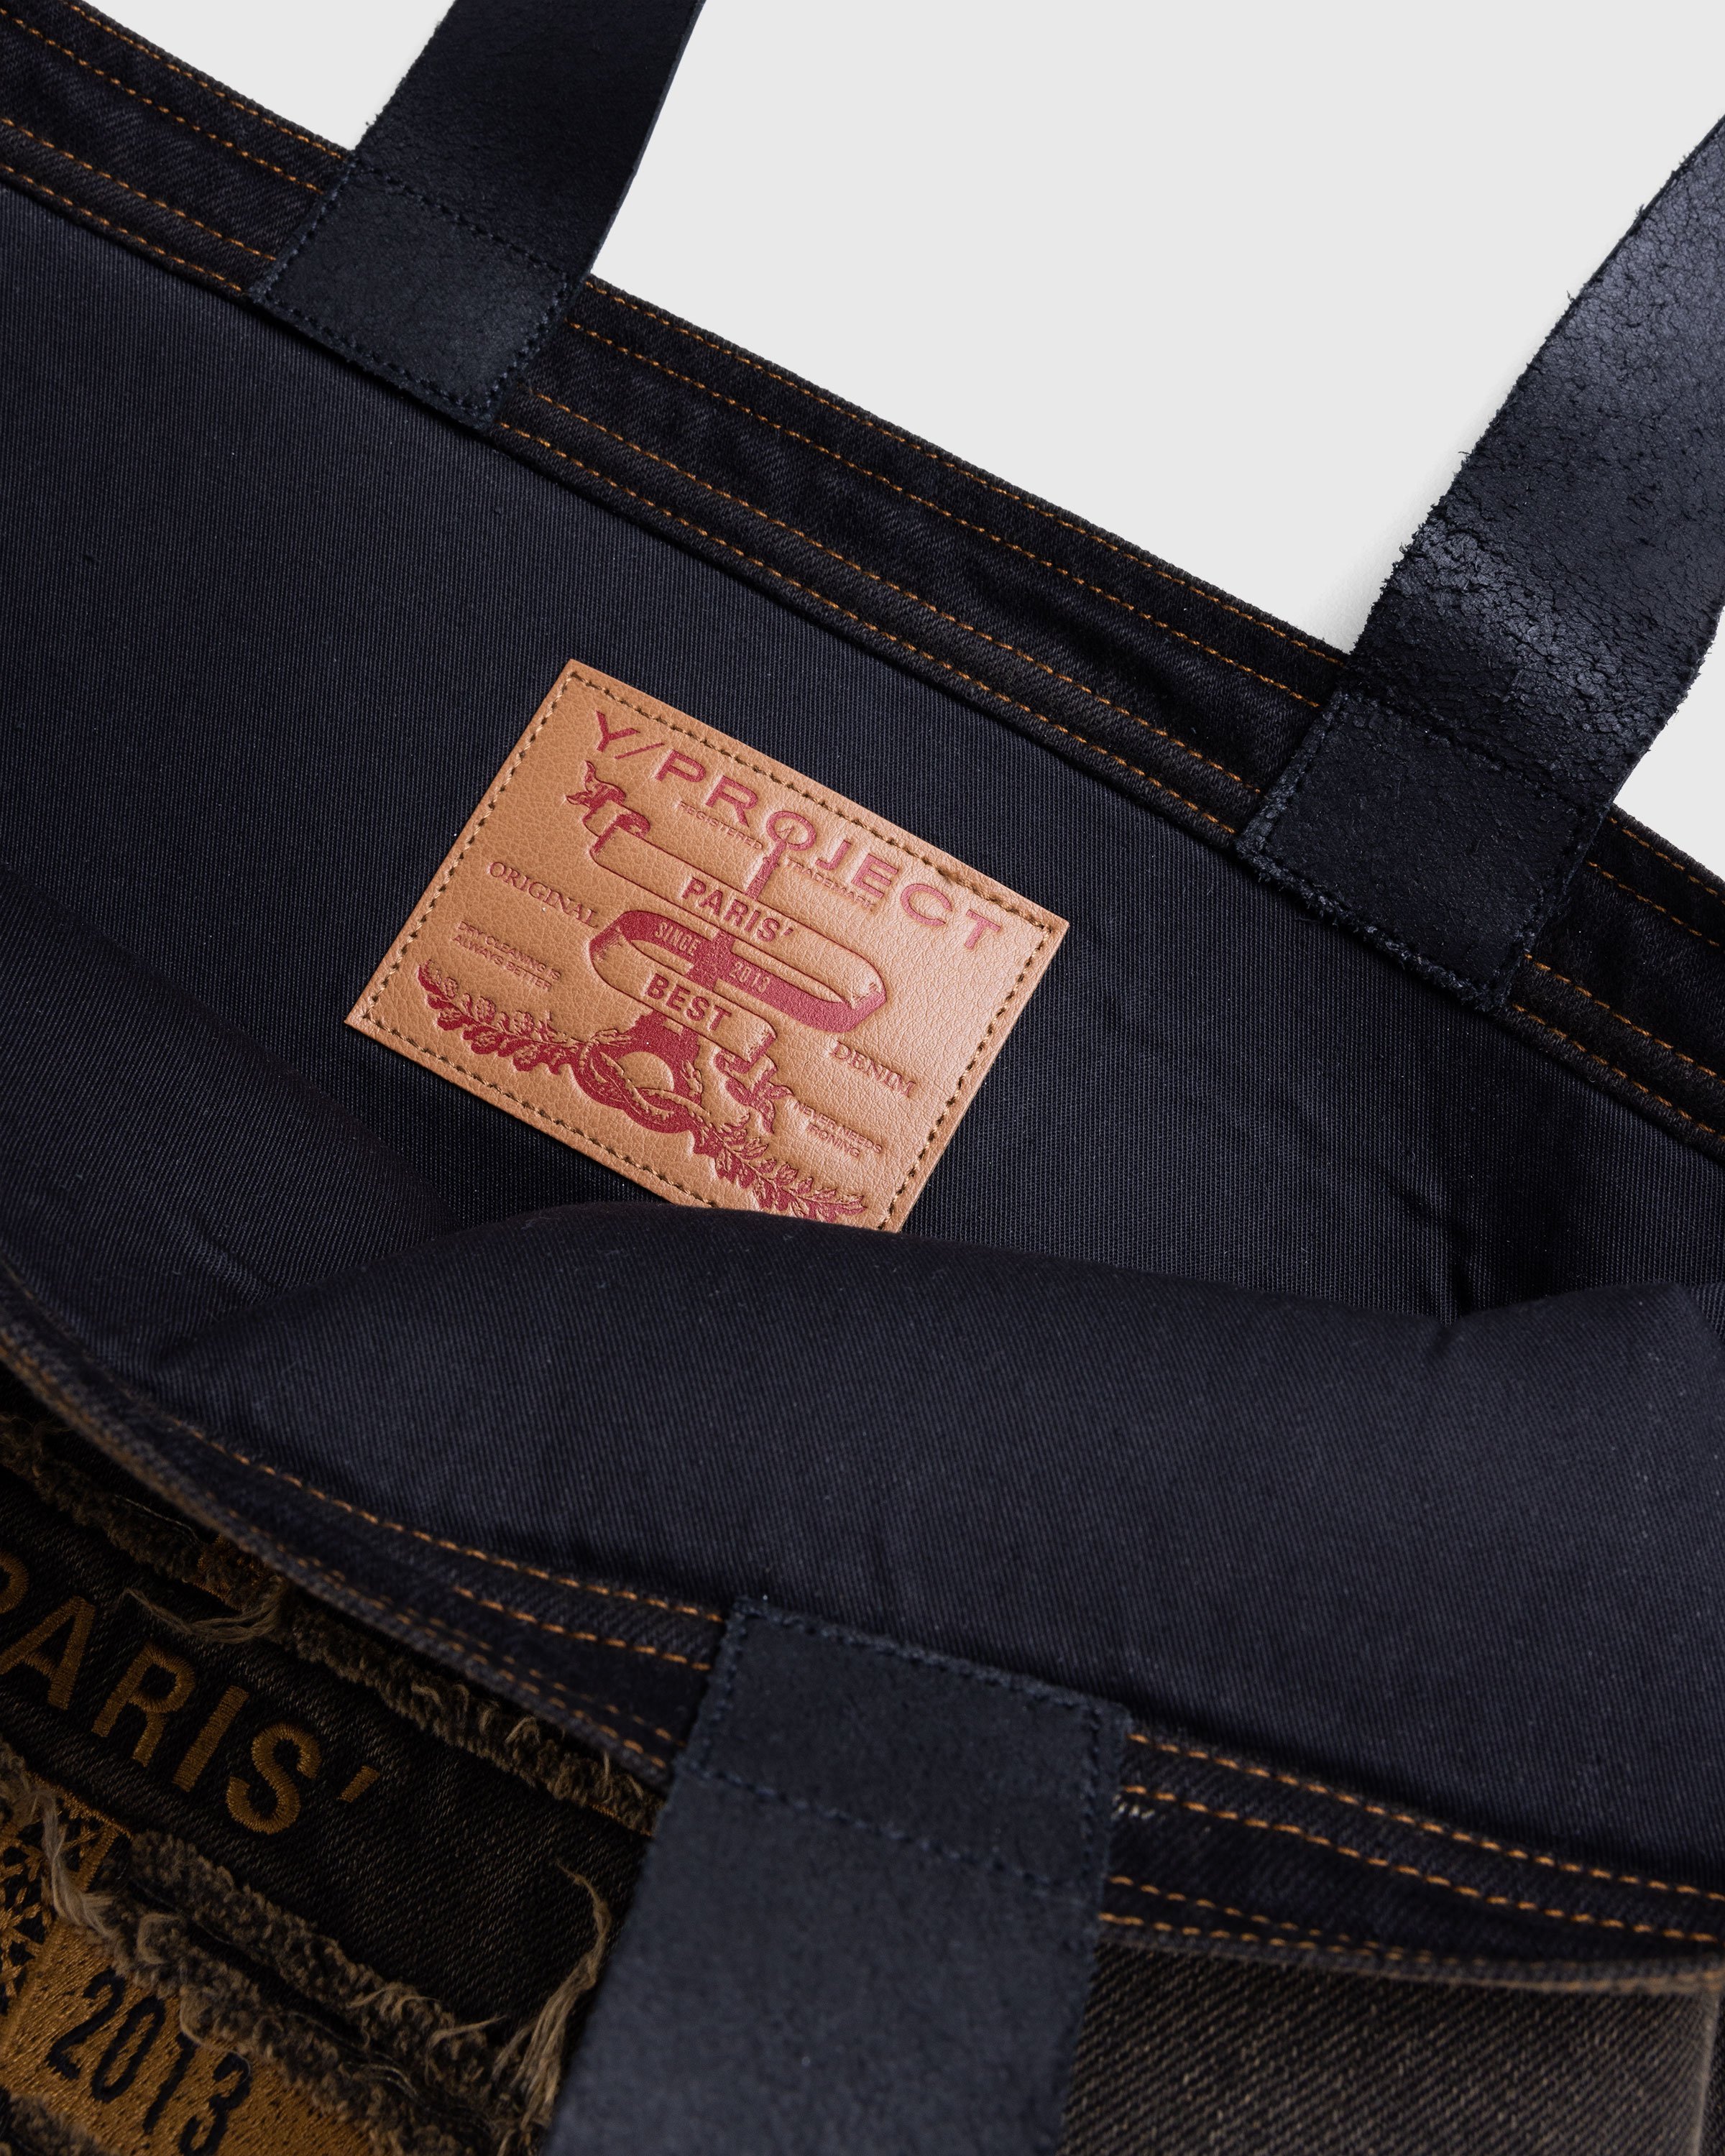 Y/Project - Paris' Best Tote Bag Vintage Black - Accessories - Black - Image 5